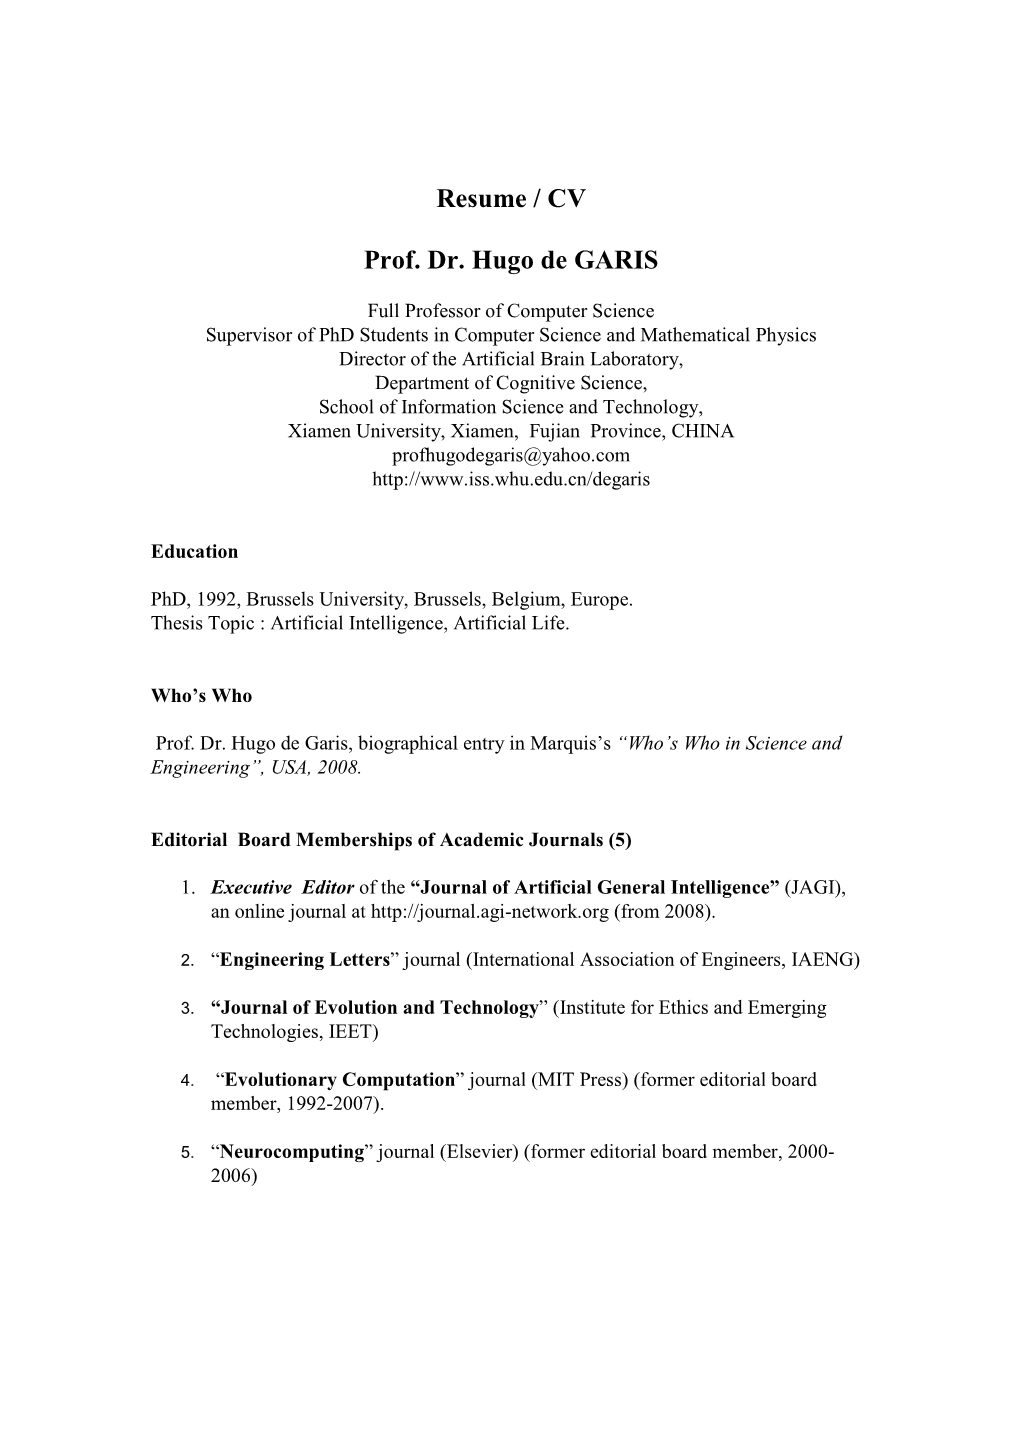 Resume / CV Prof. Dr. Hugo De GARIS